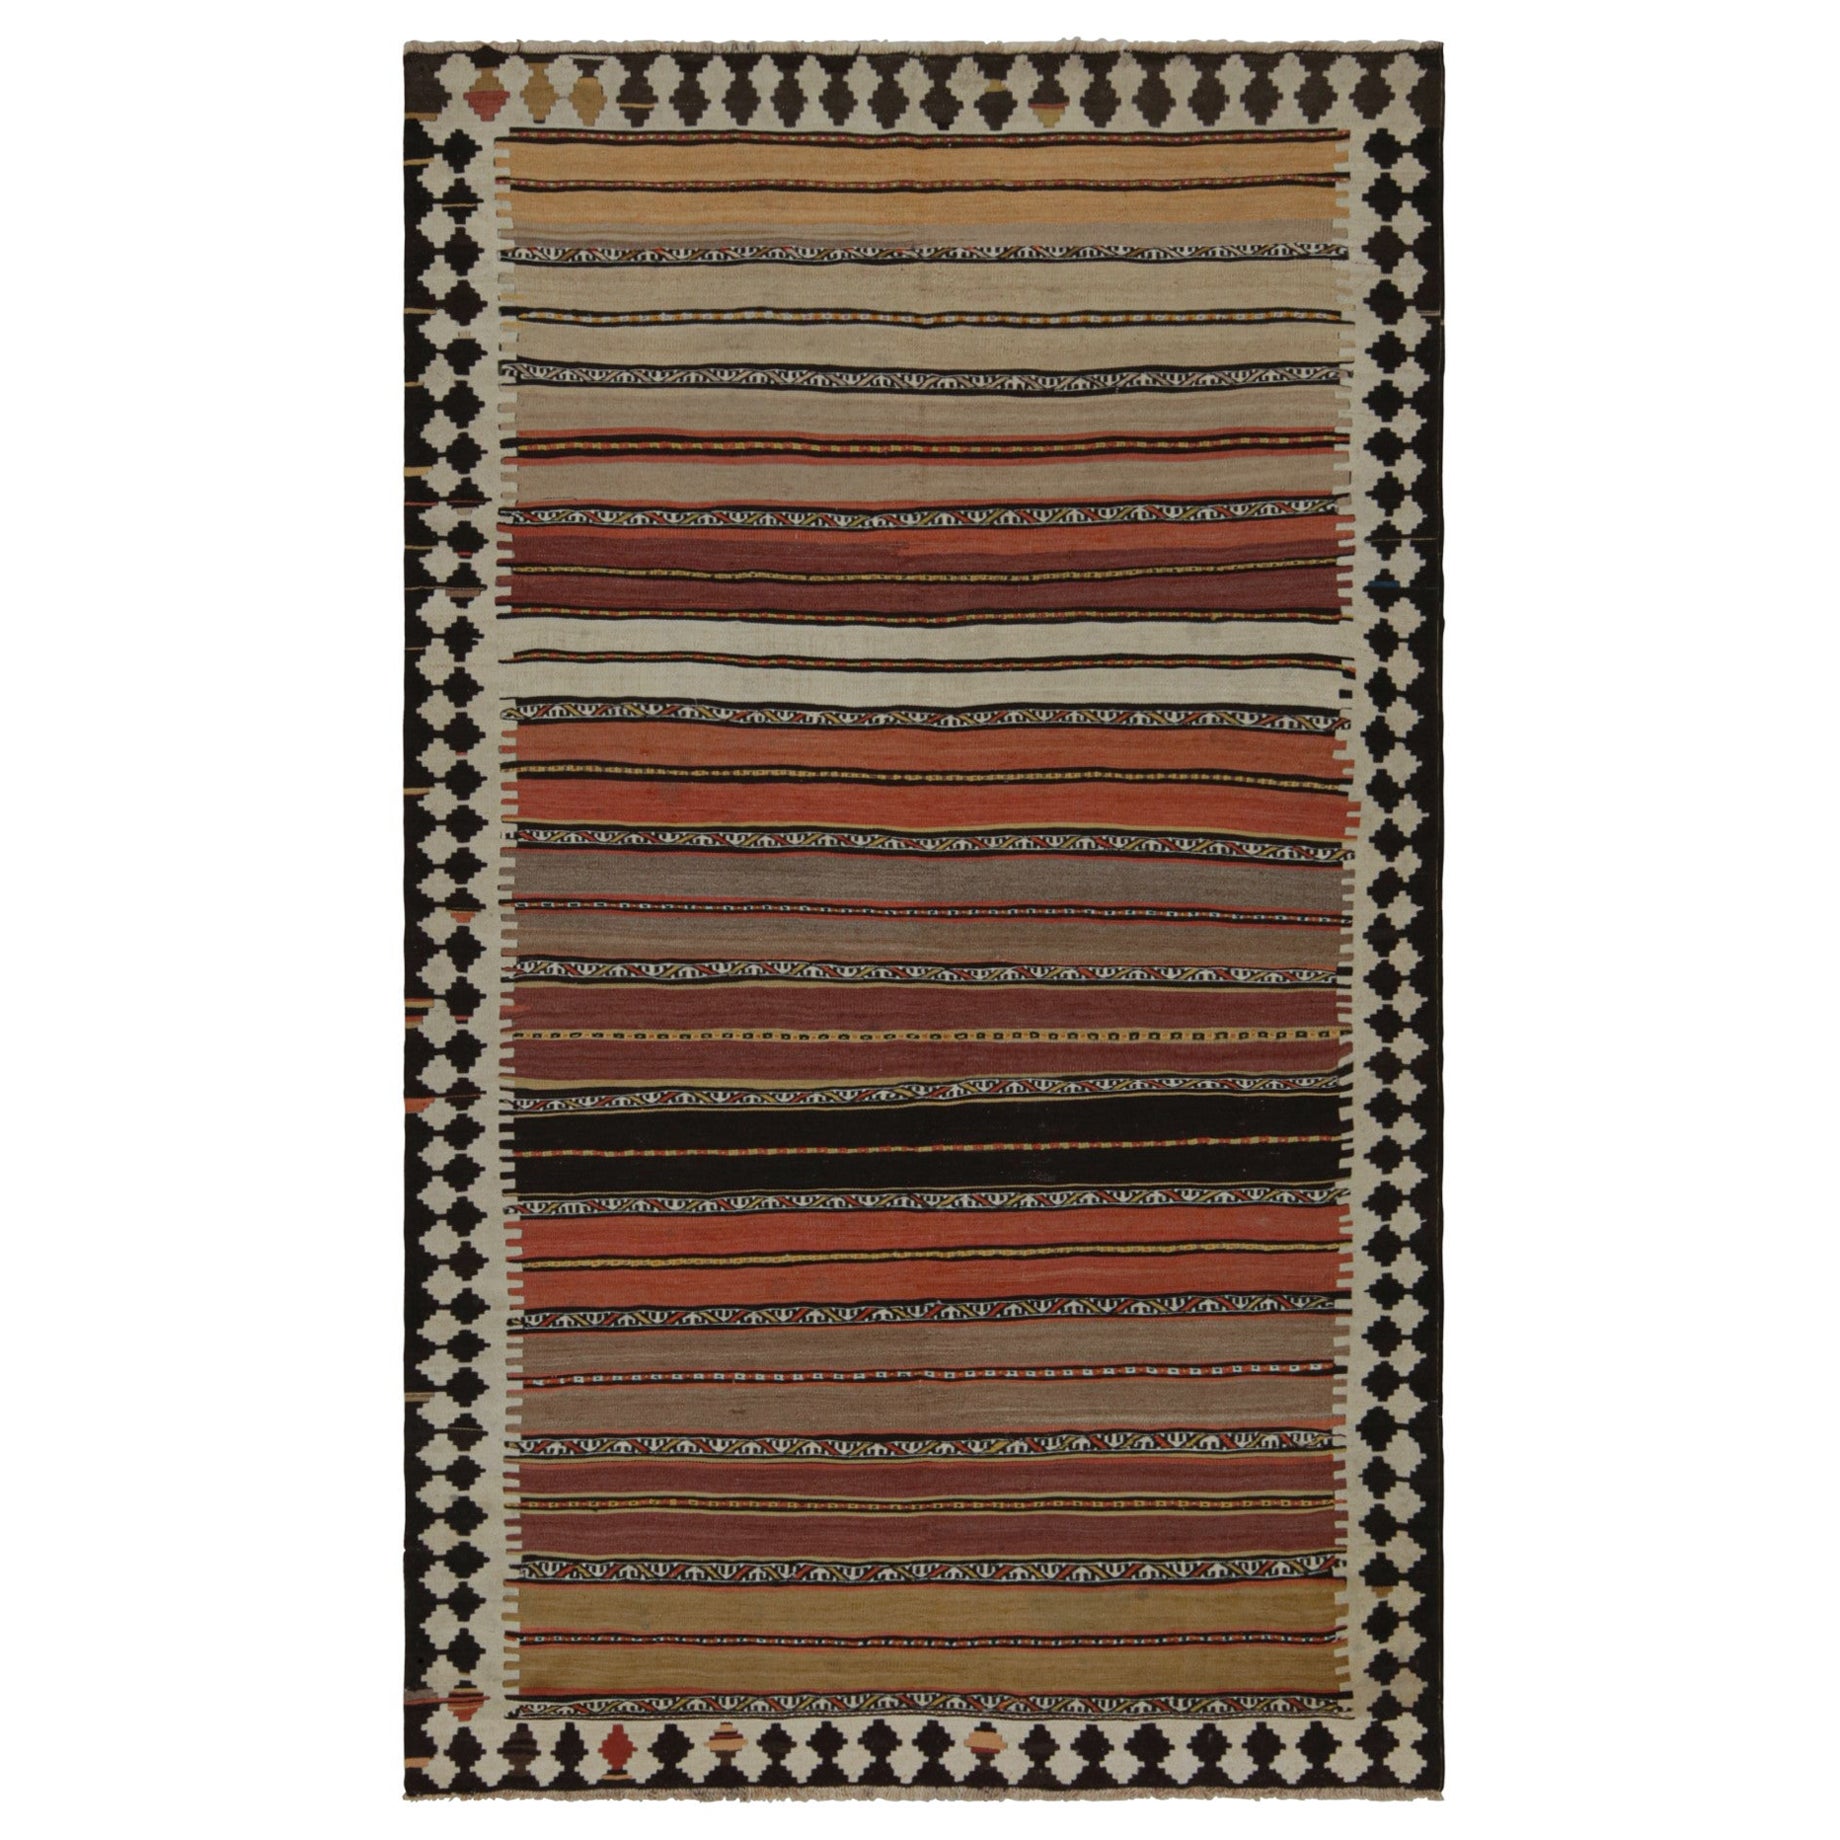 Vintage Afghan Tribal Kilim Rug, with Geometric Stripes, from Rug & Kilim 